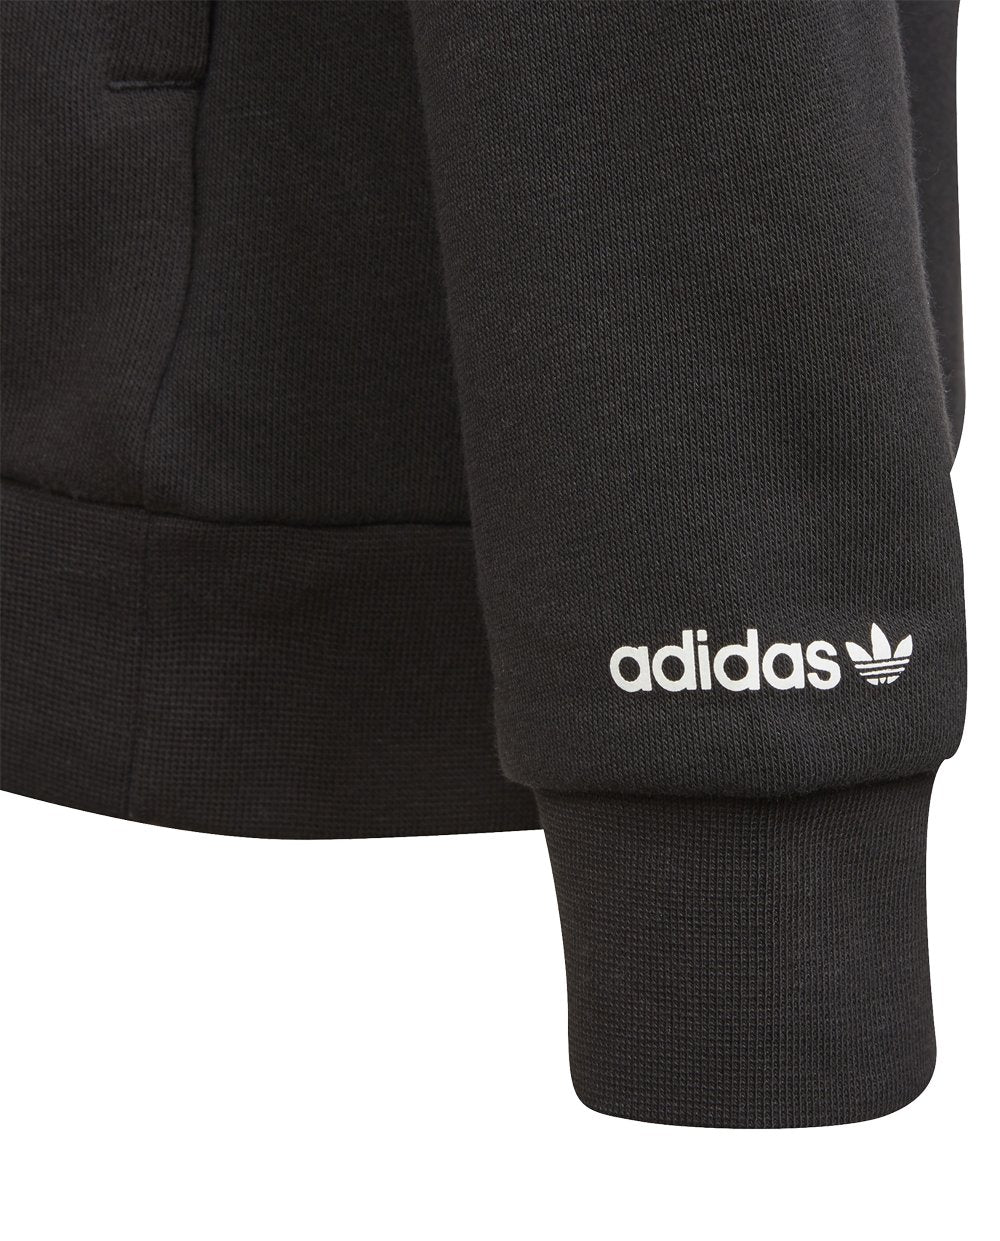 Adidas Black Hoodie with Colors